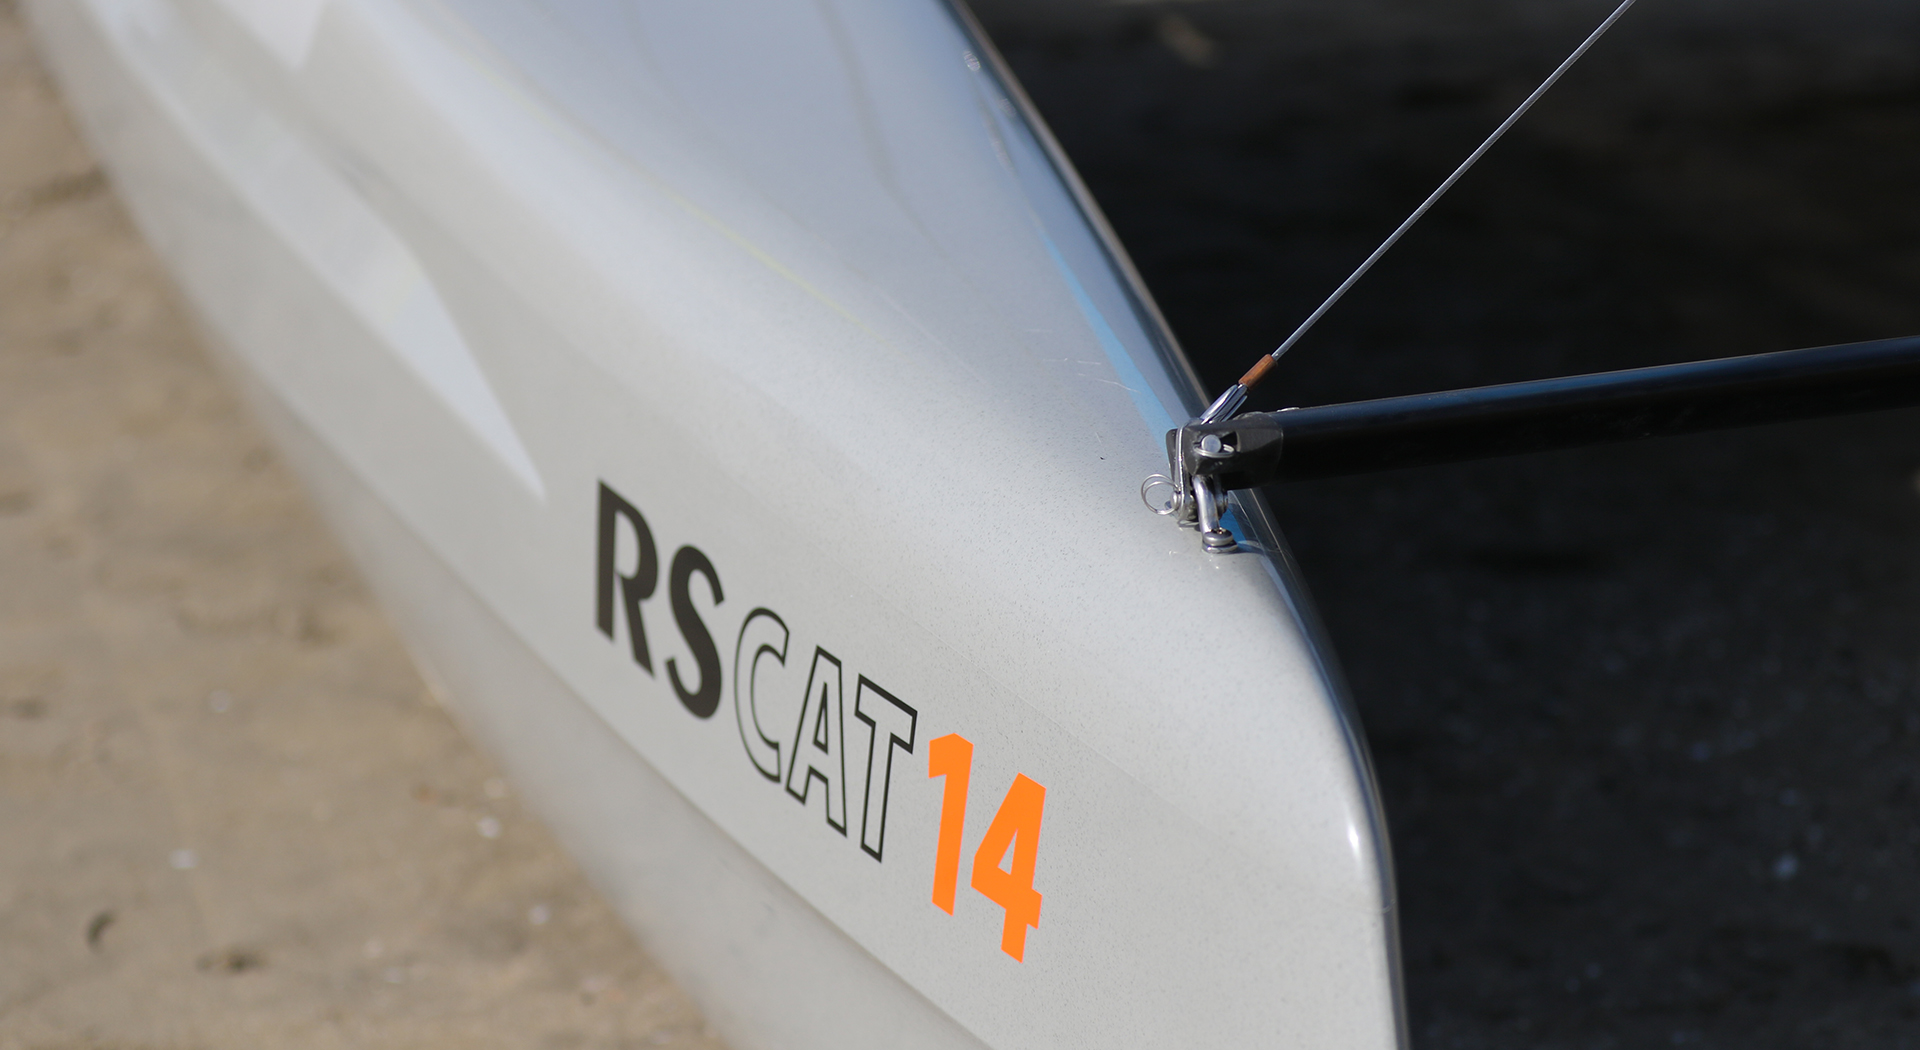 RS Cat 14 Central Coast Sailing 5.jpg